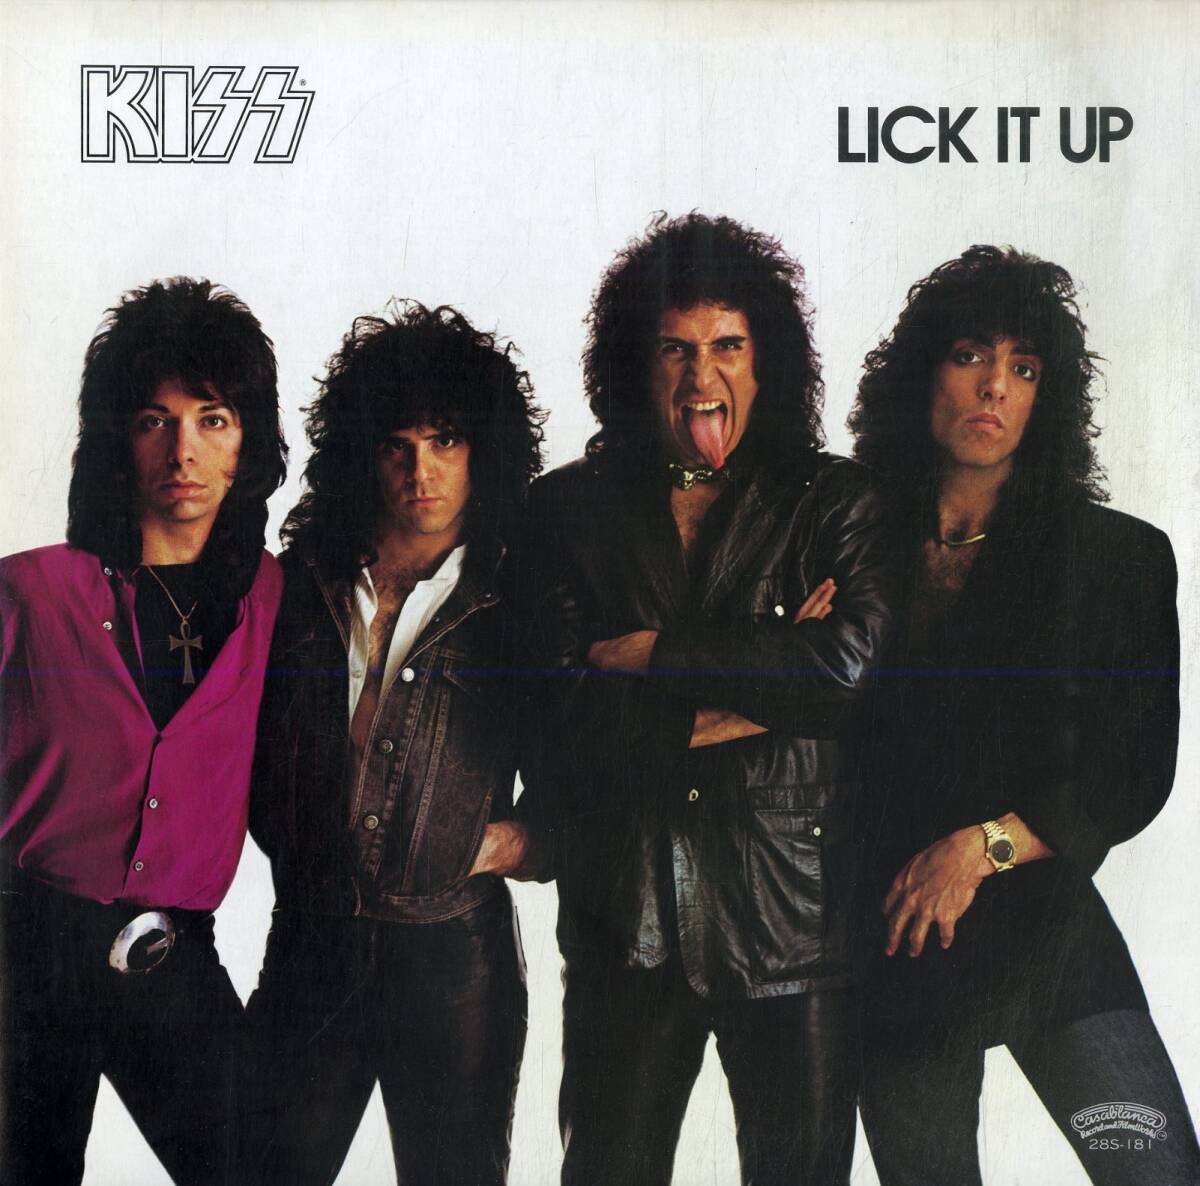 A00586700/LP/キッス(KISS)「Lick It Up 地獄の回想 (1983年・28S-181・ハードロック)」_画像3